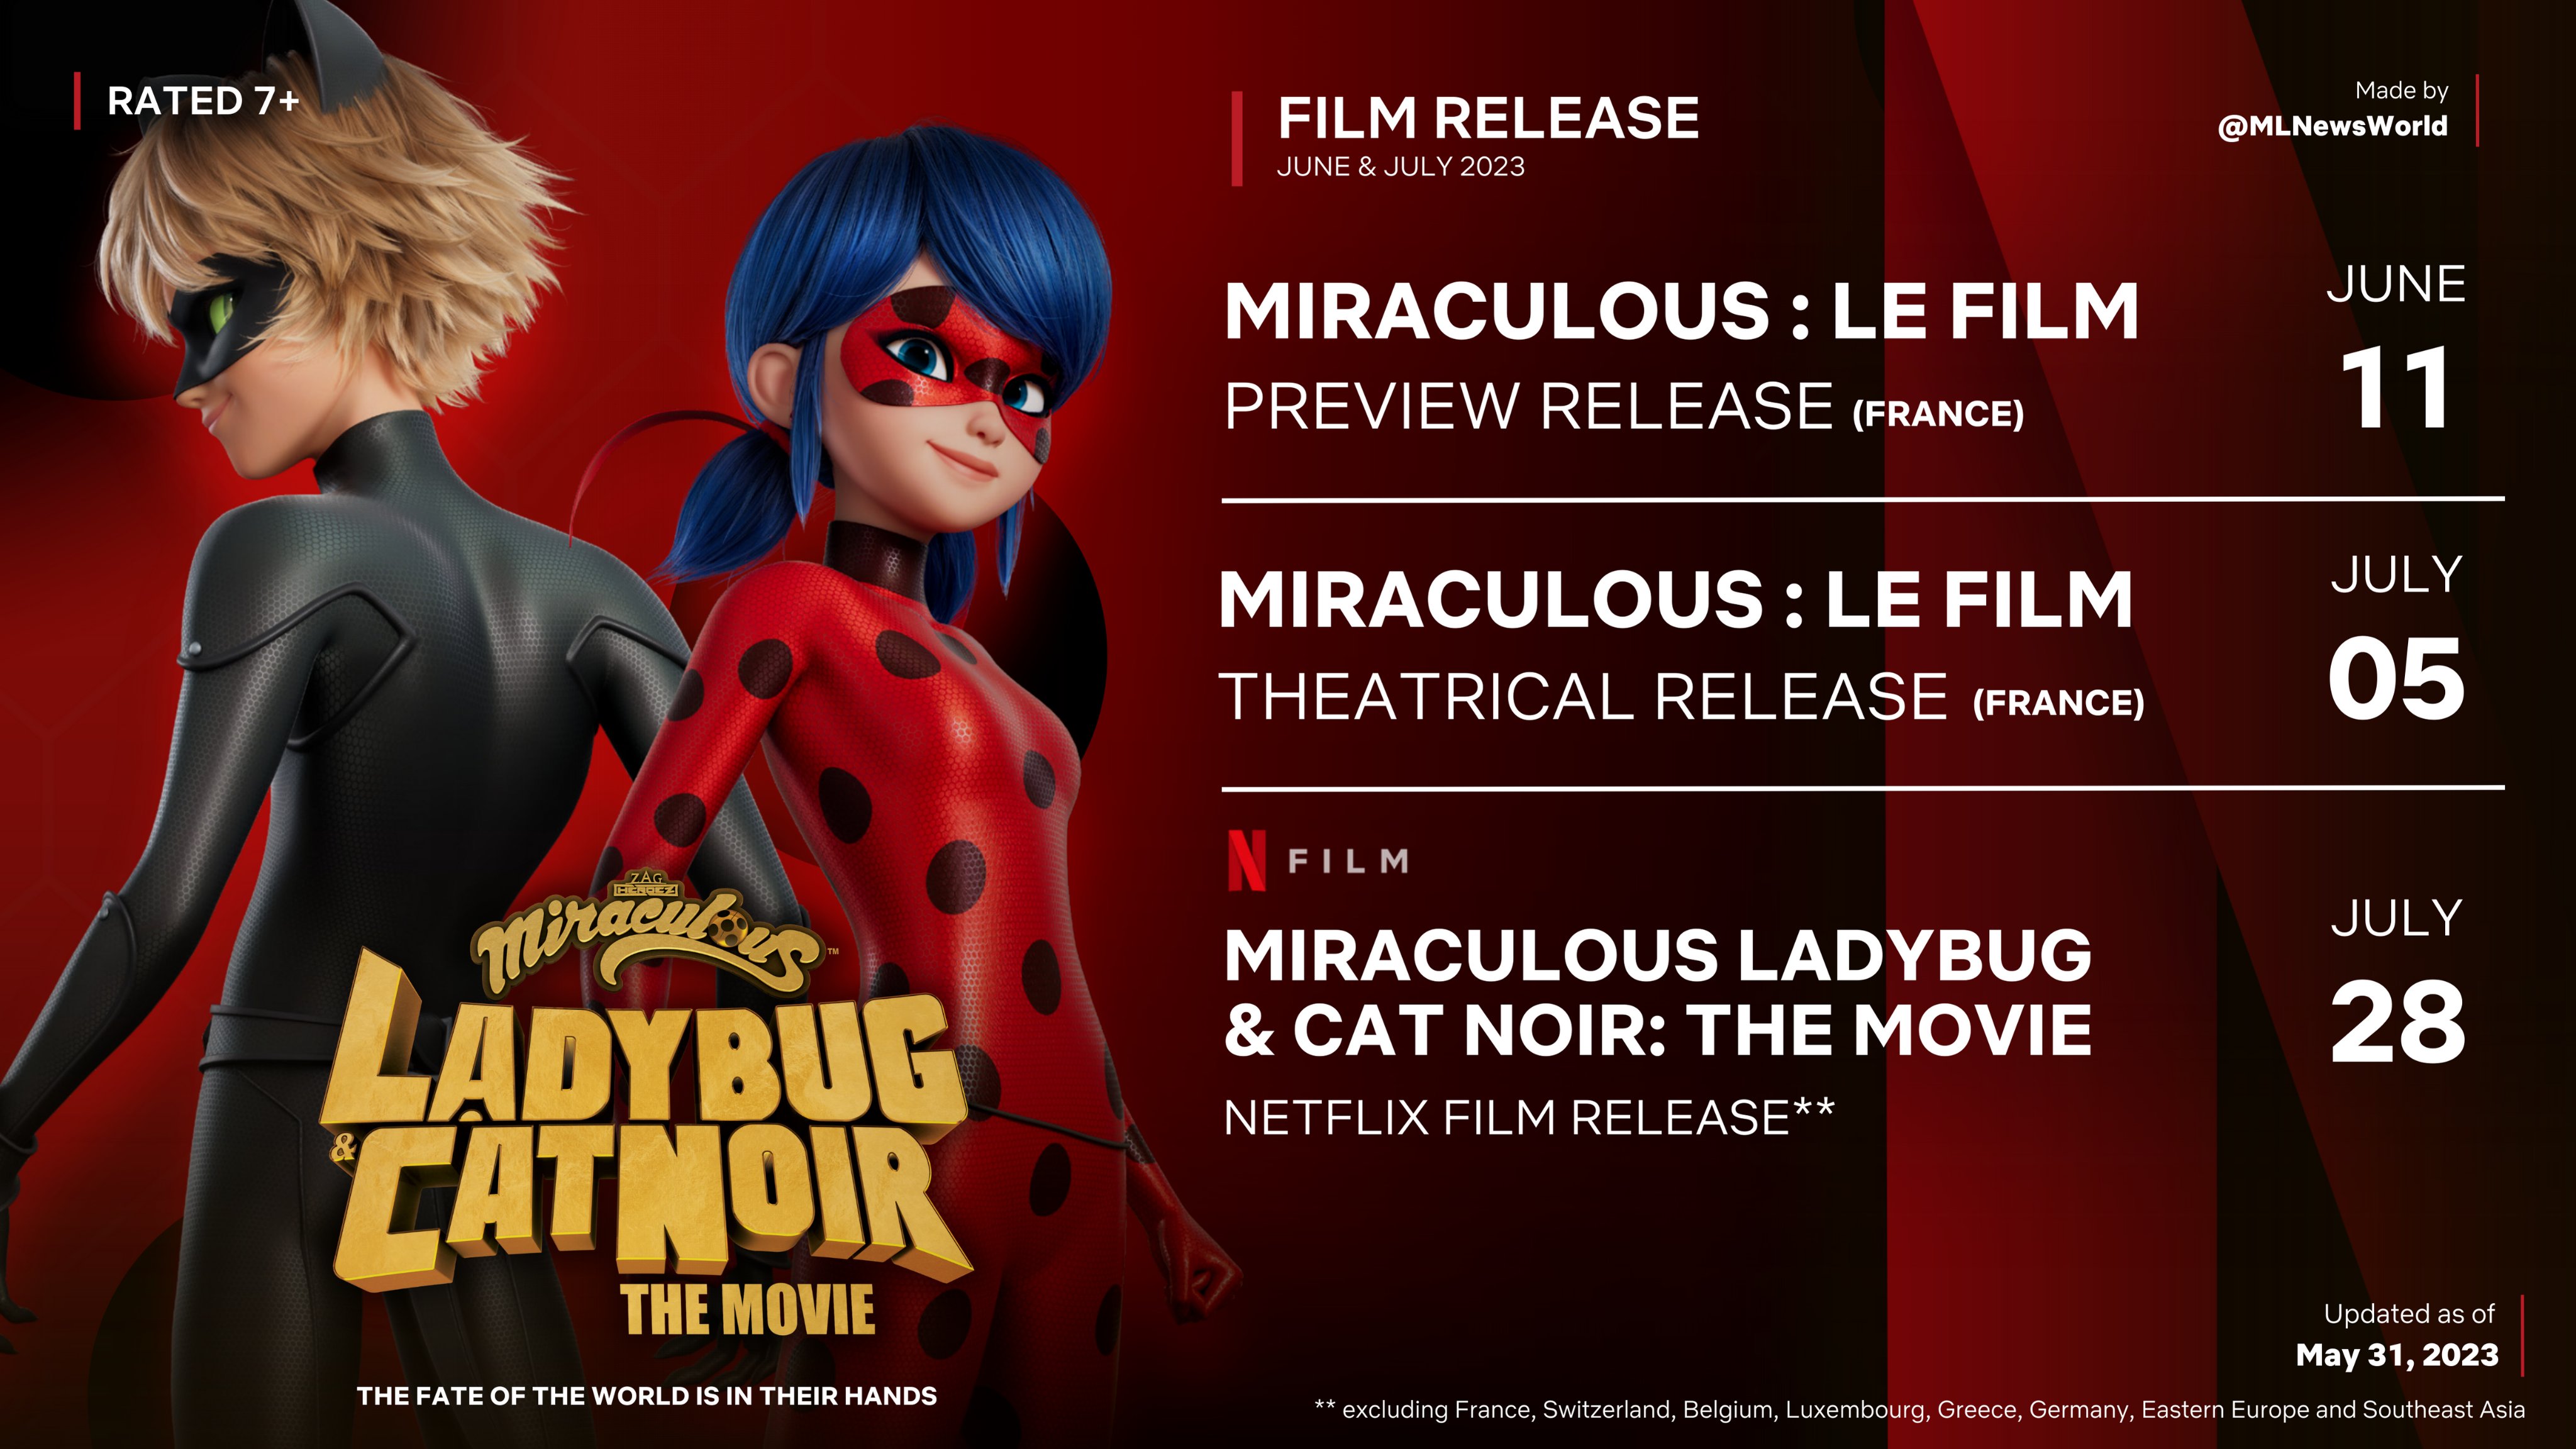 Miraculous News World 🐞 on X: 🐞 Miraculous Film Releases 🎬  #MiraculousAwakening #MiraculousLeFilm  / X